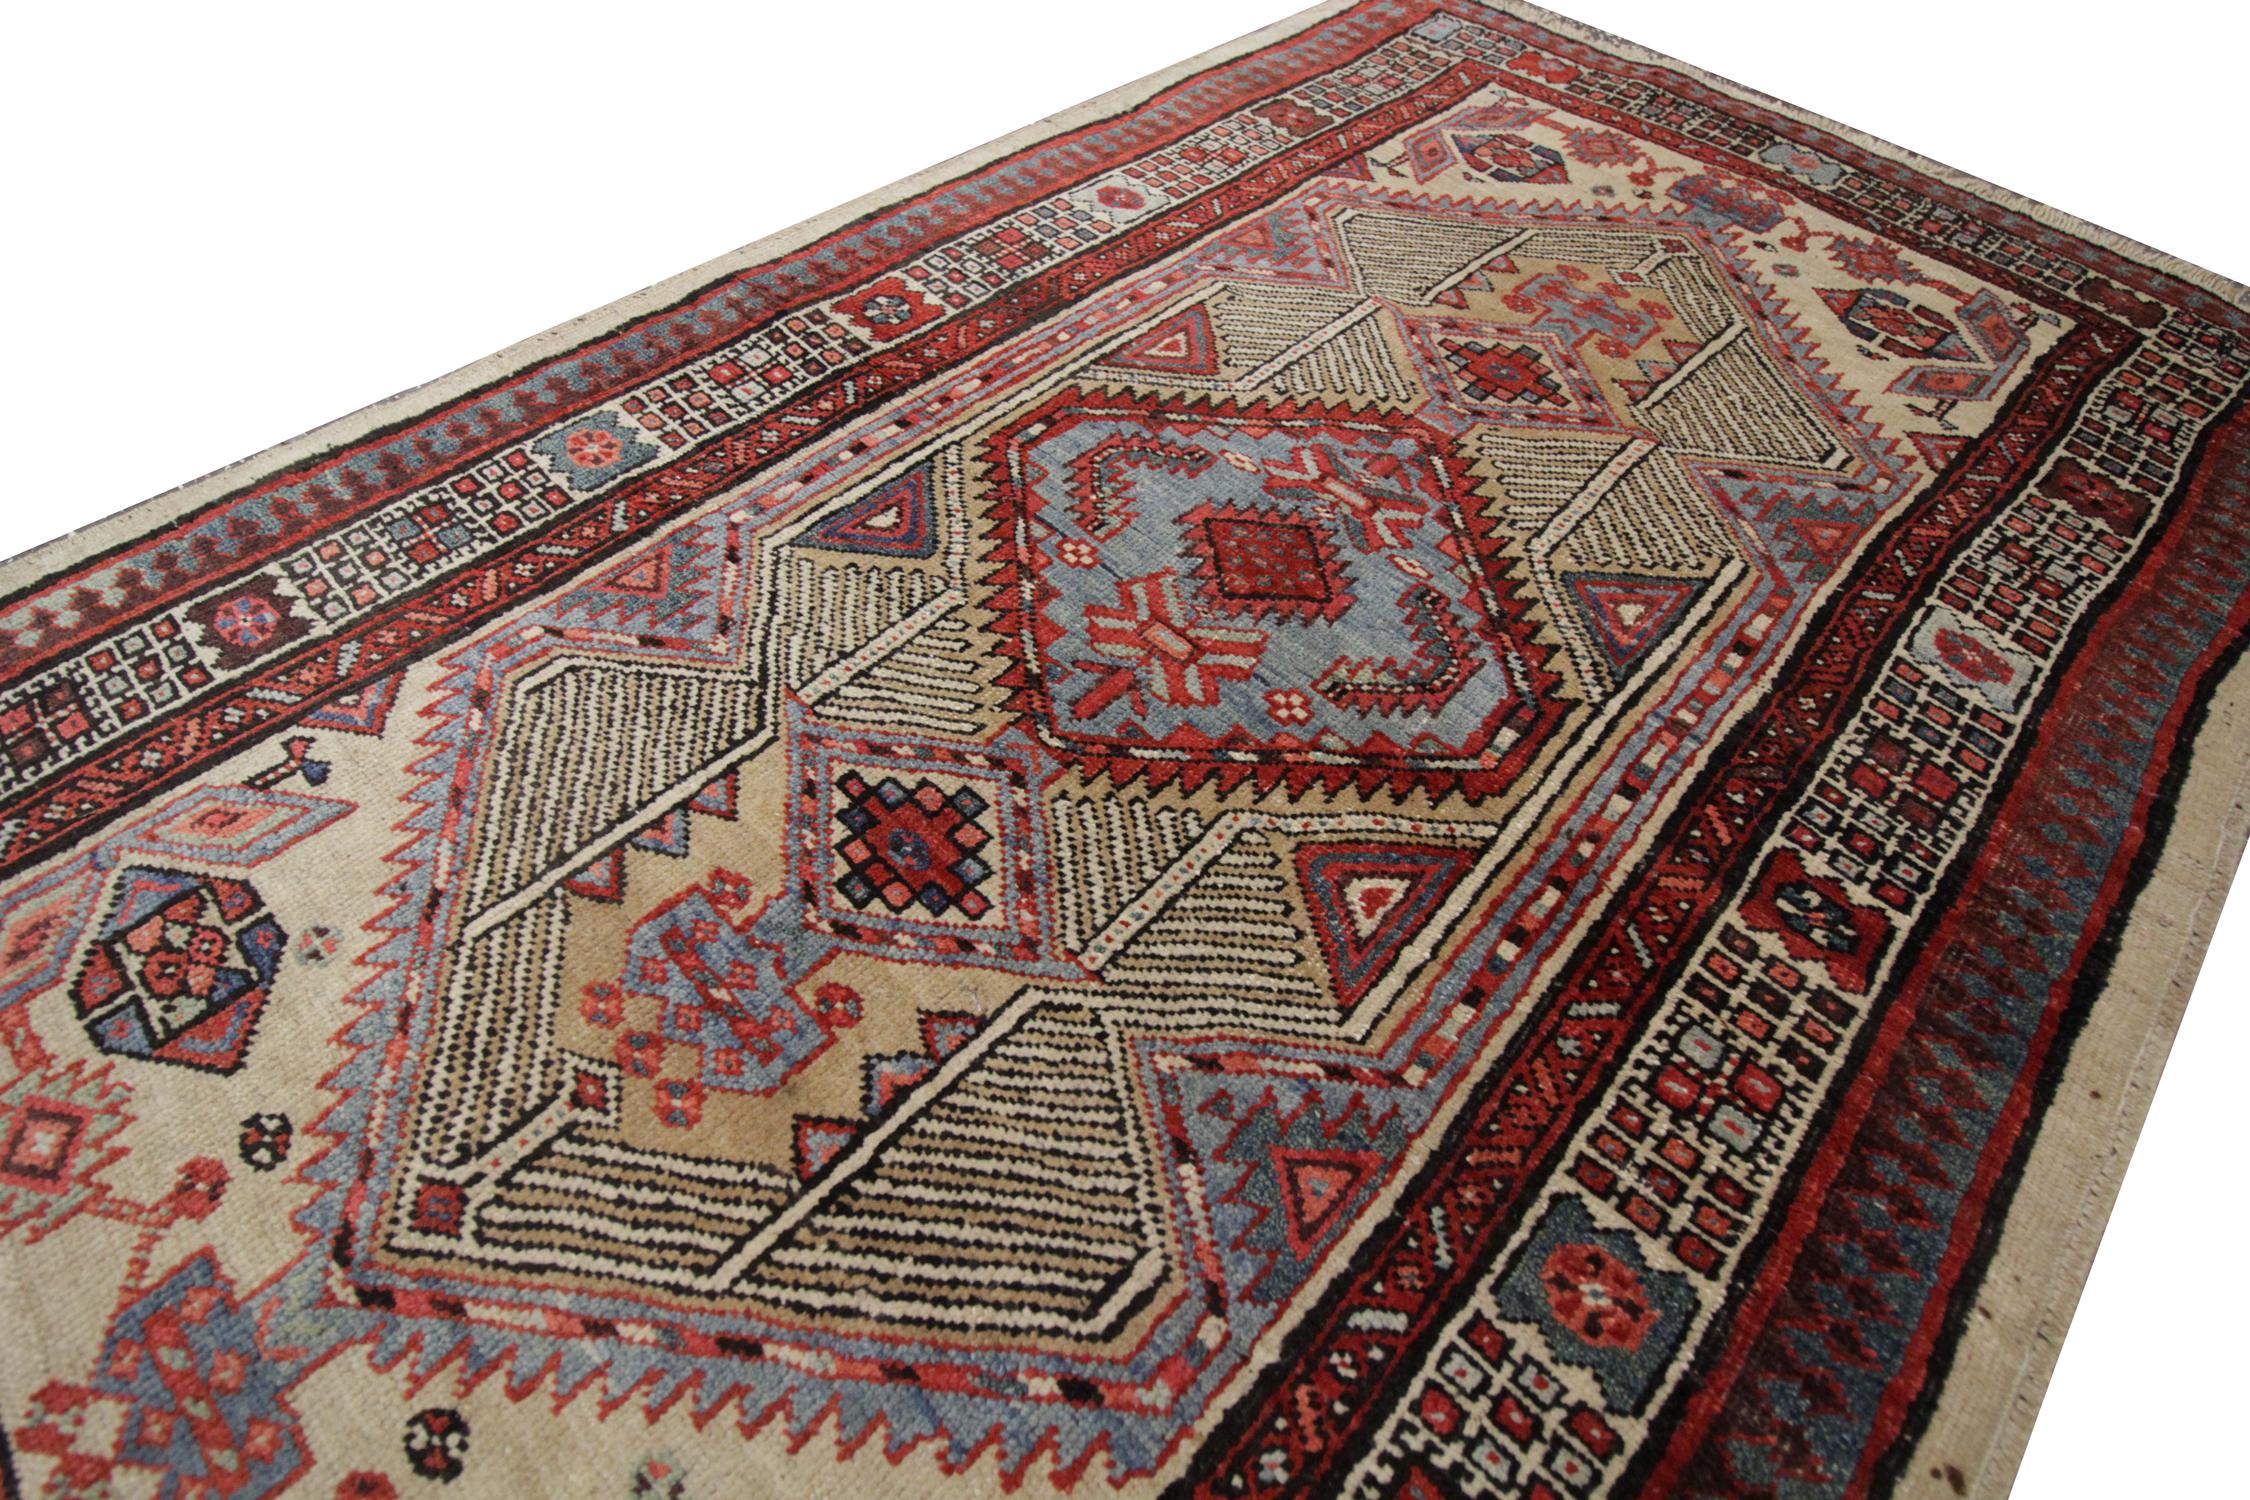 Tribal Handmade Antique Caucasian Rug, Oriental Deep Red and Beige Wool Rug for Bedroom For Sale